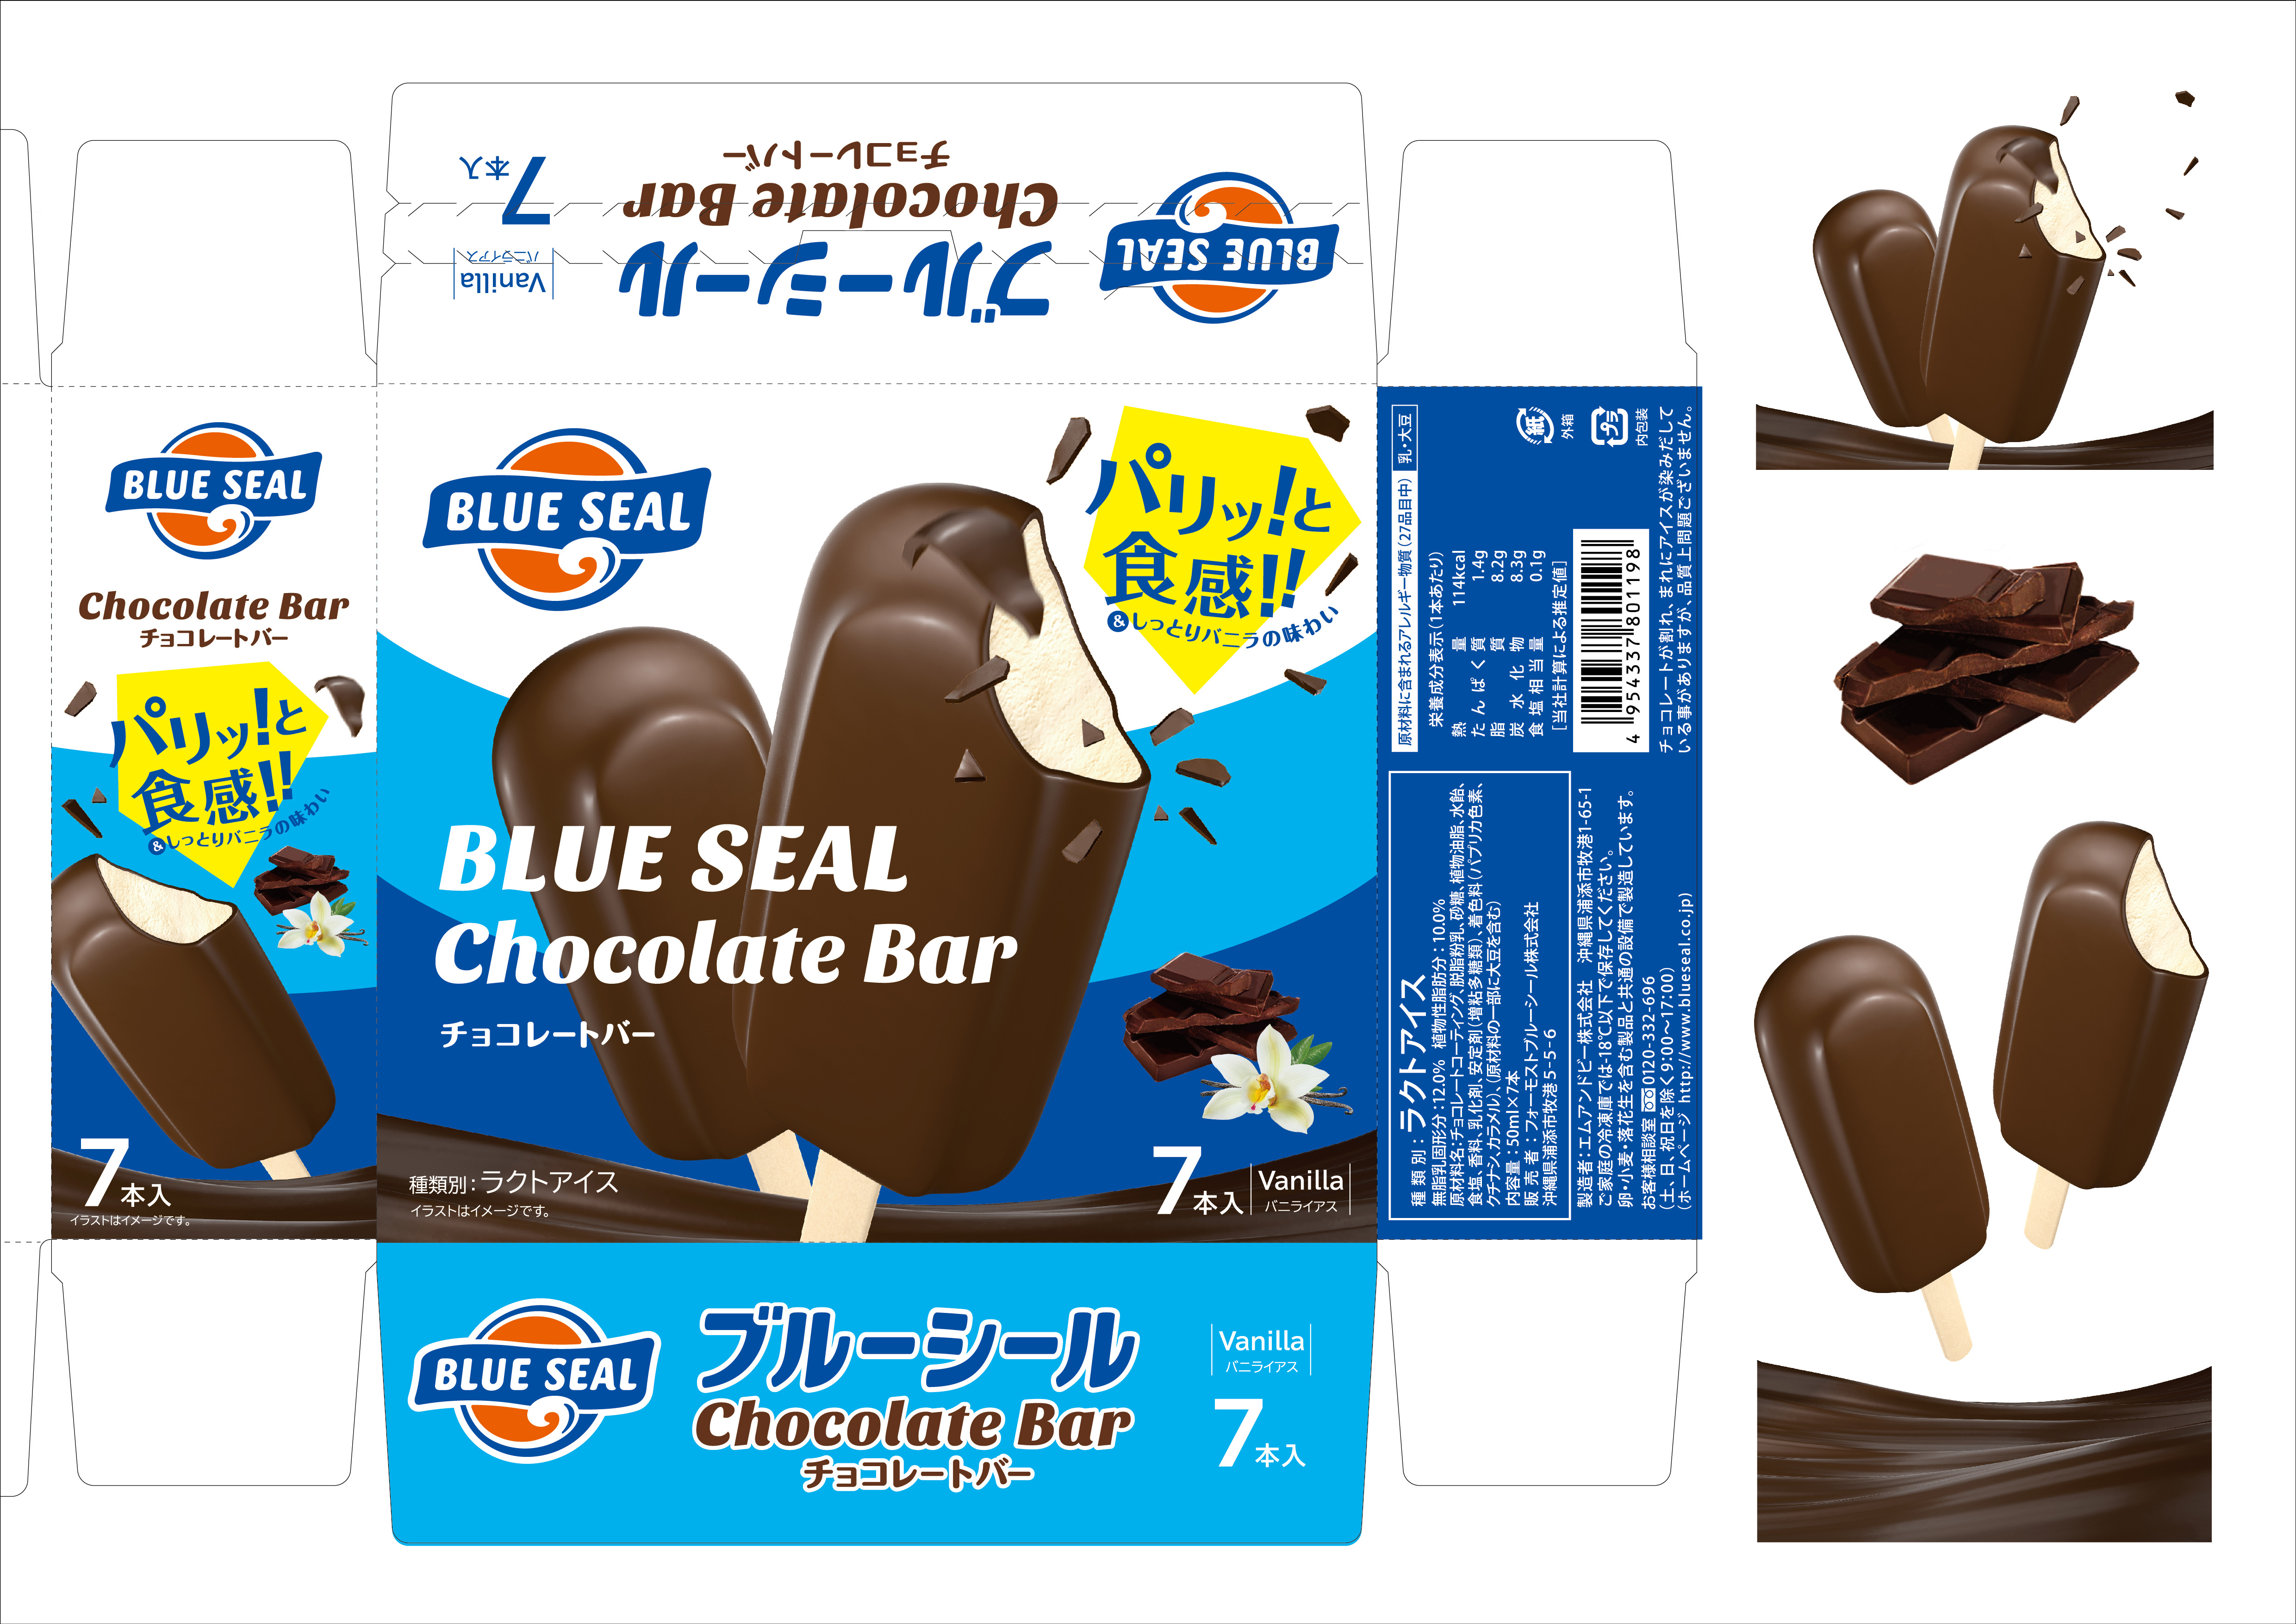 BLUE SEAL Chocolate Bar